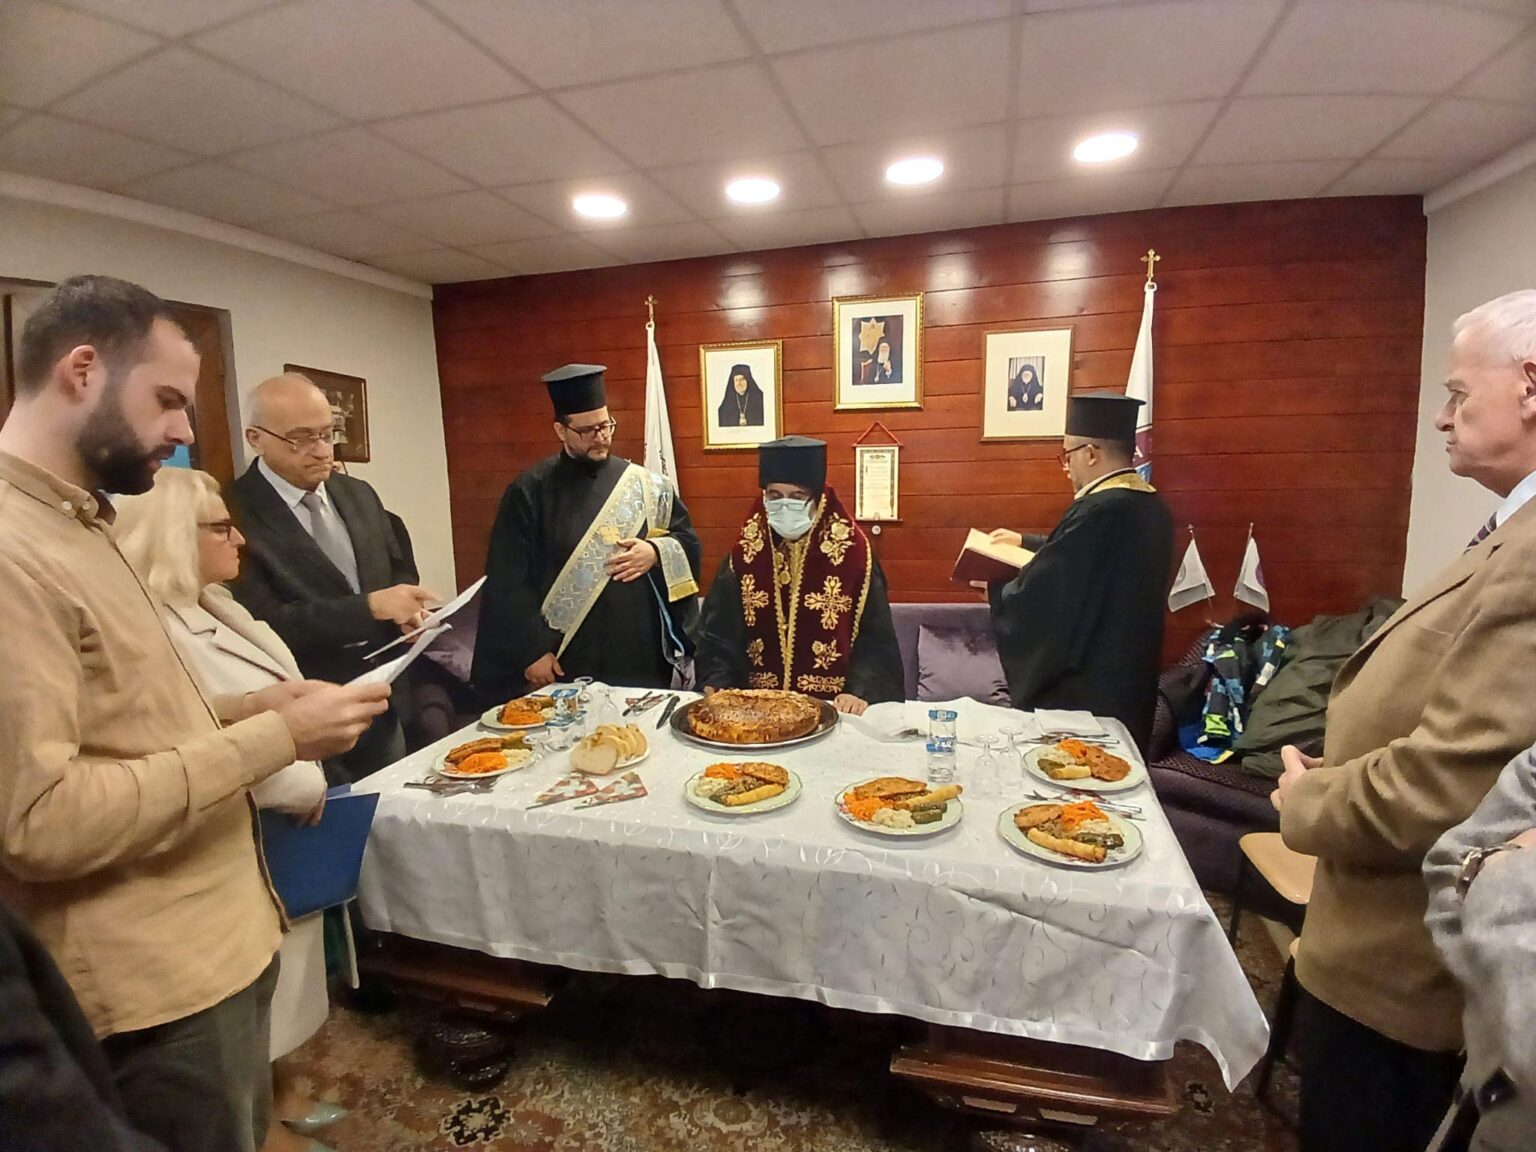 Divine Liturgy was celebrated at Church of Saint Paraskevi in Community of Vathyryakos